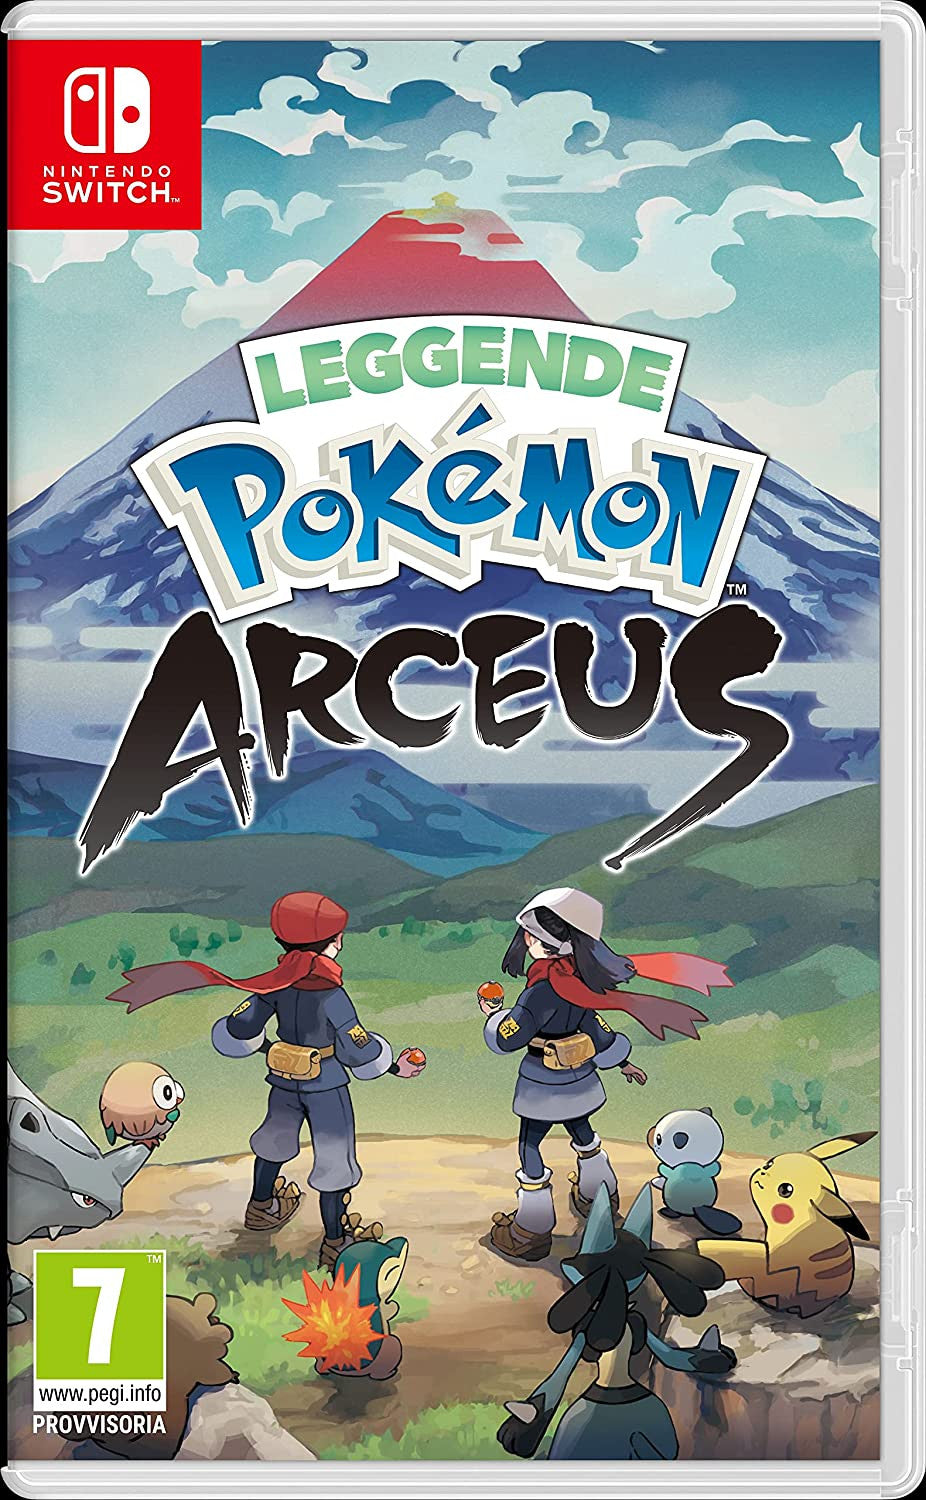 Switch Pokemon Legends Arceus - Albagame